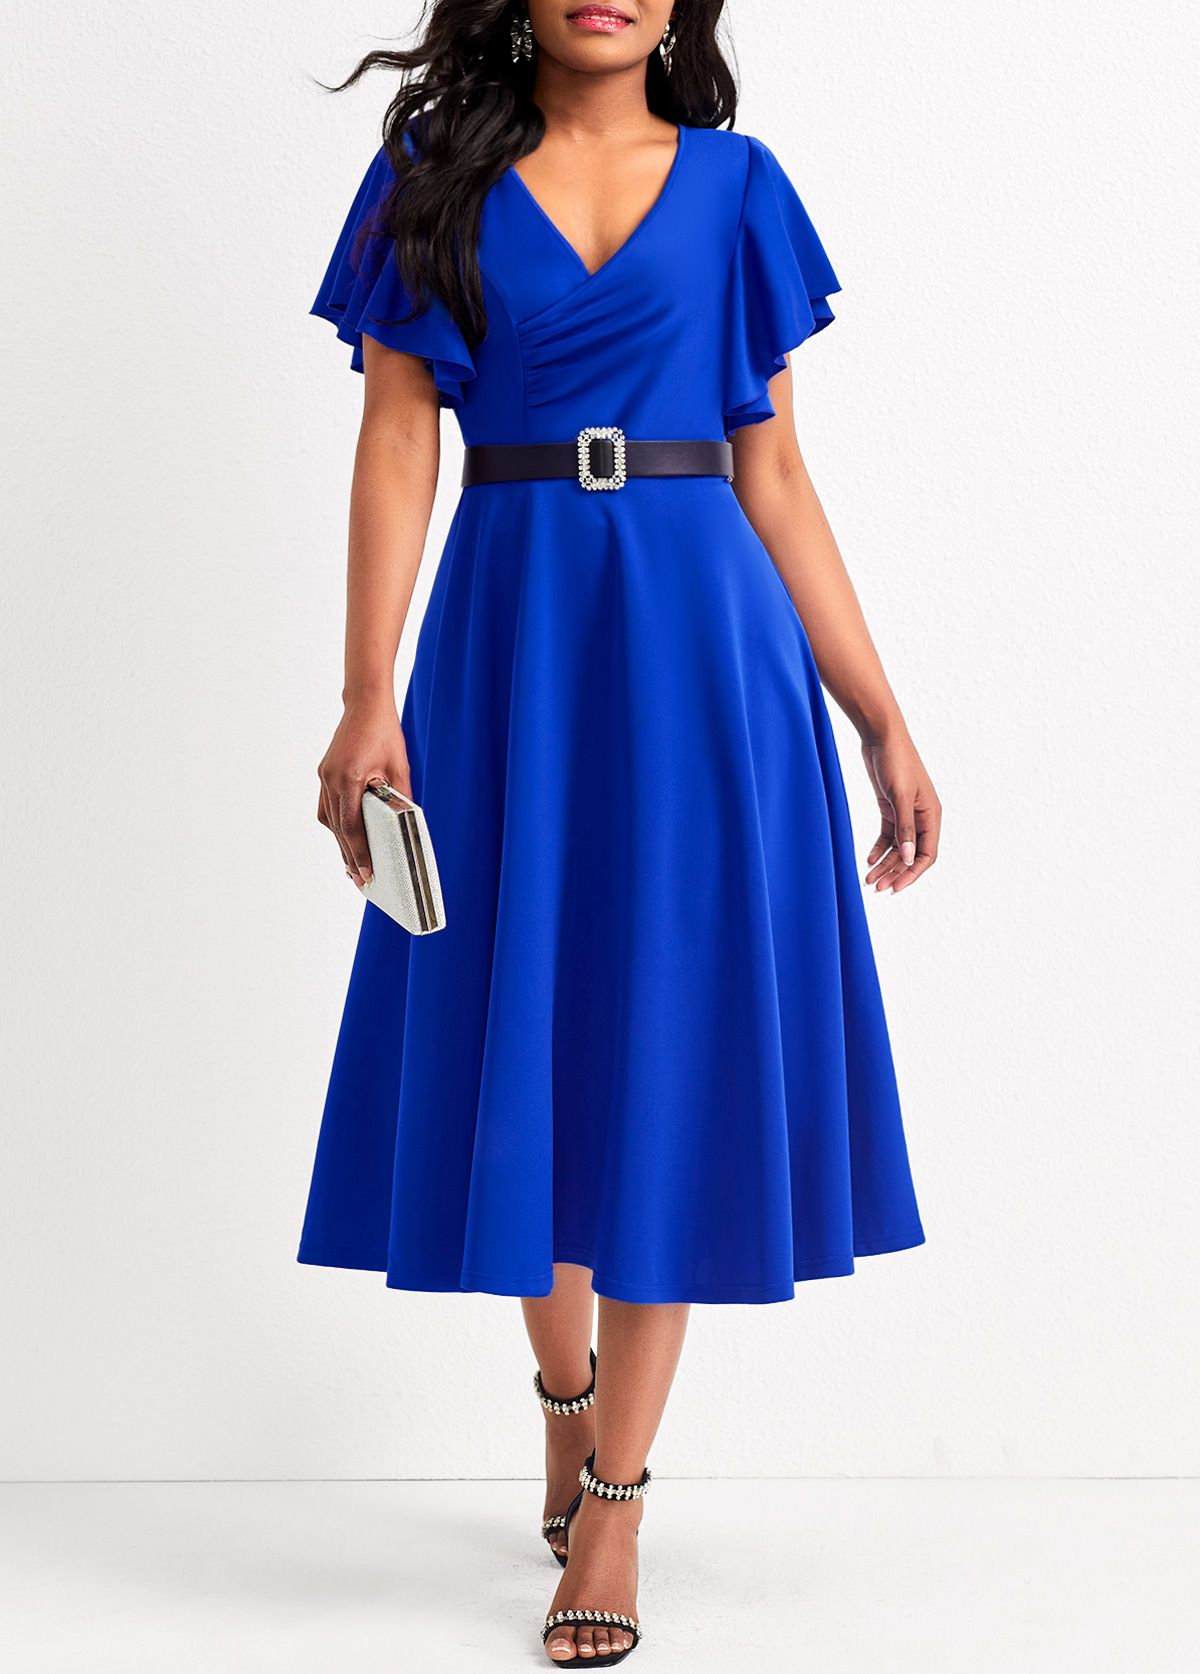 ROTITA Smocked Royal Blue V Neck Short Sleeve Dress